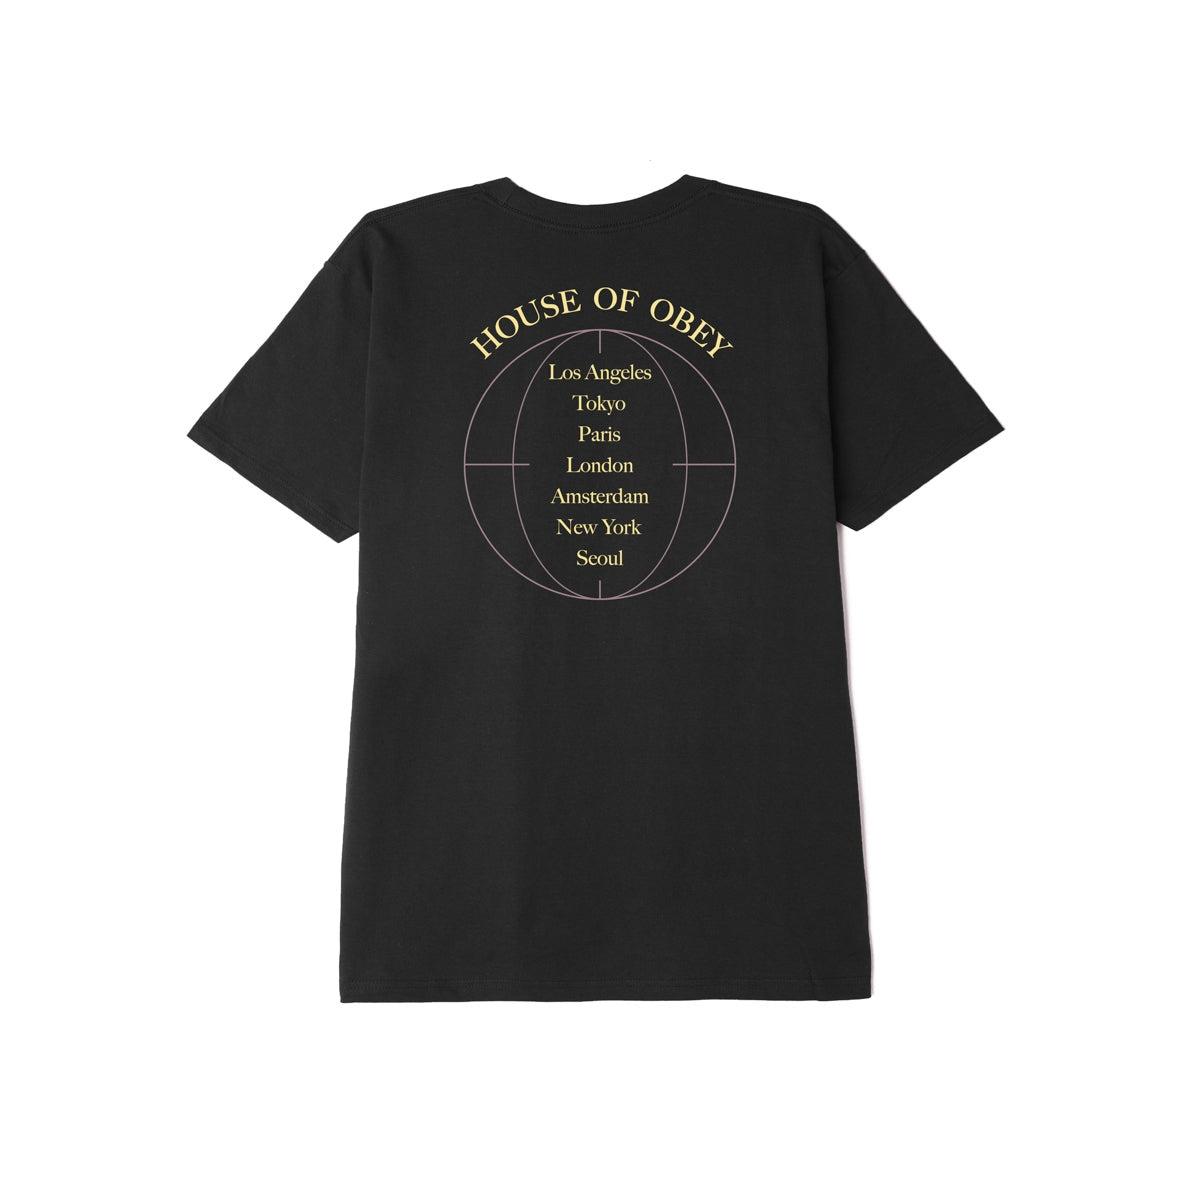 T-shirt Global classic tee